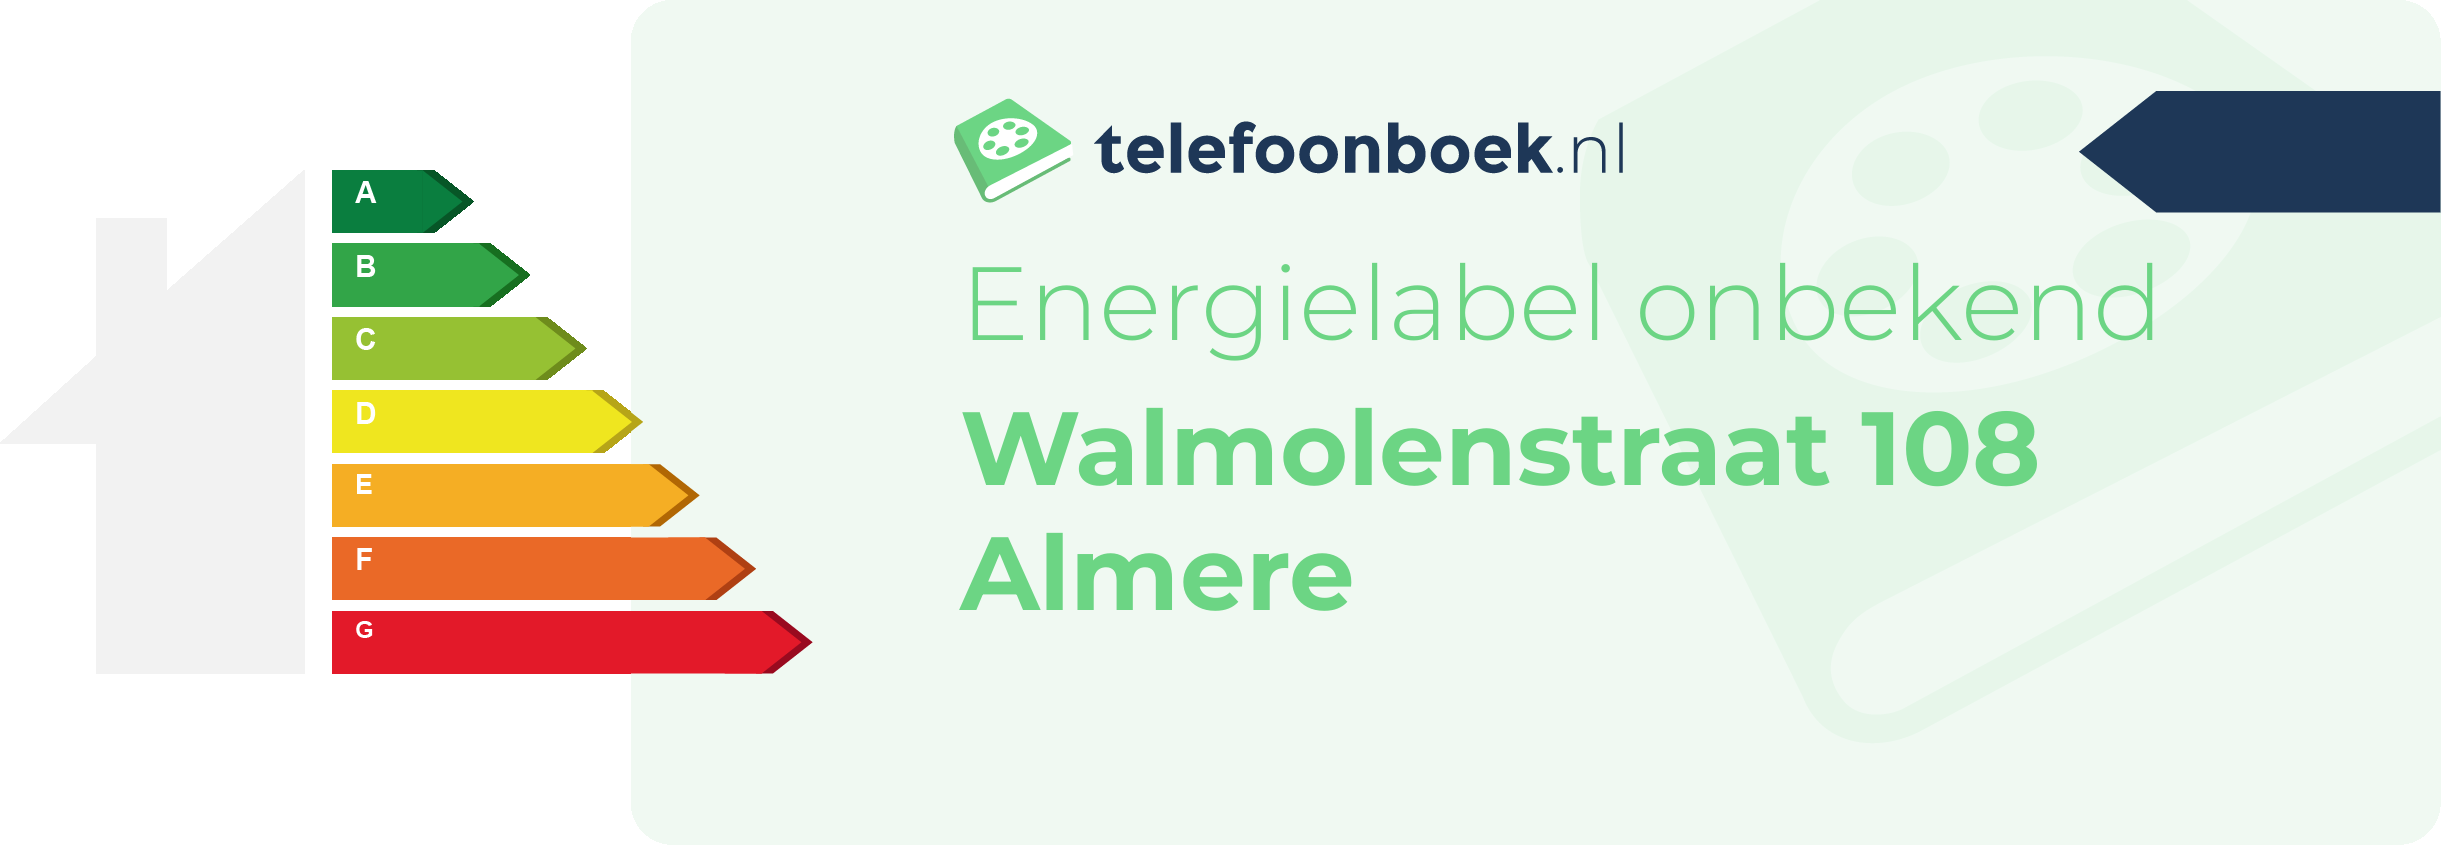 Energielabel Walmolenstraat 108 Almere